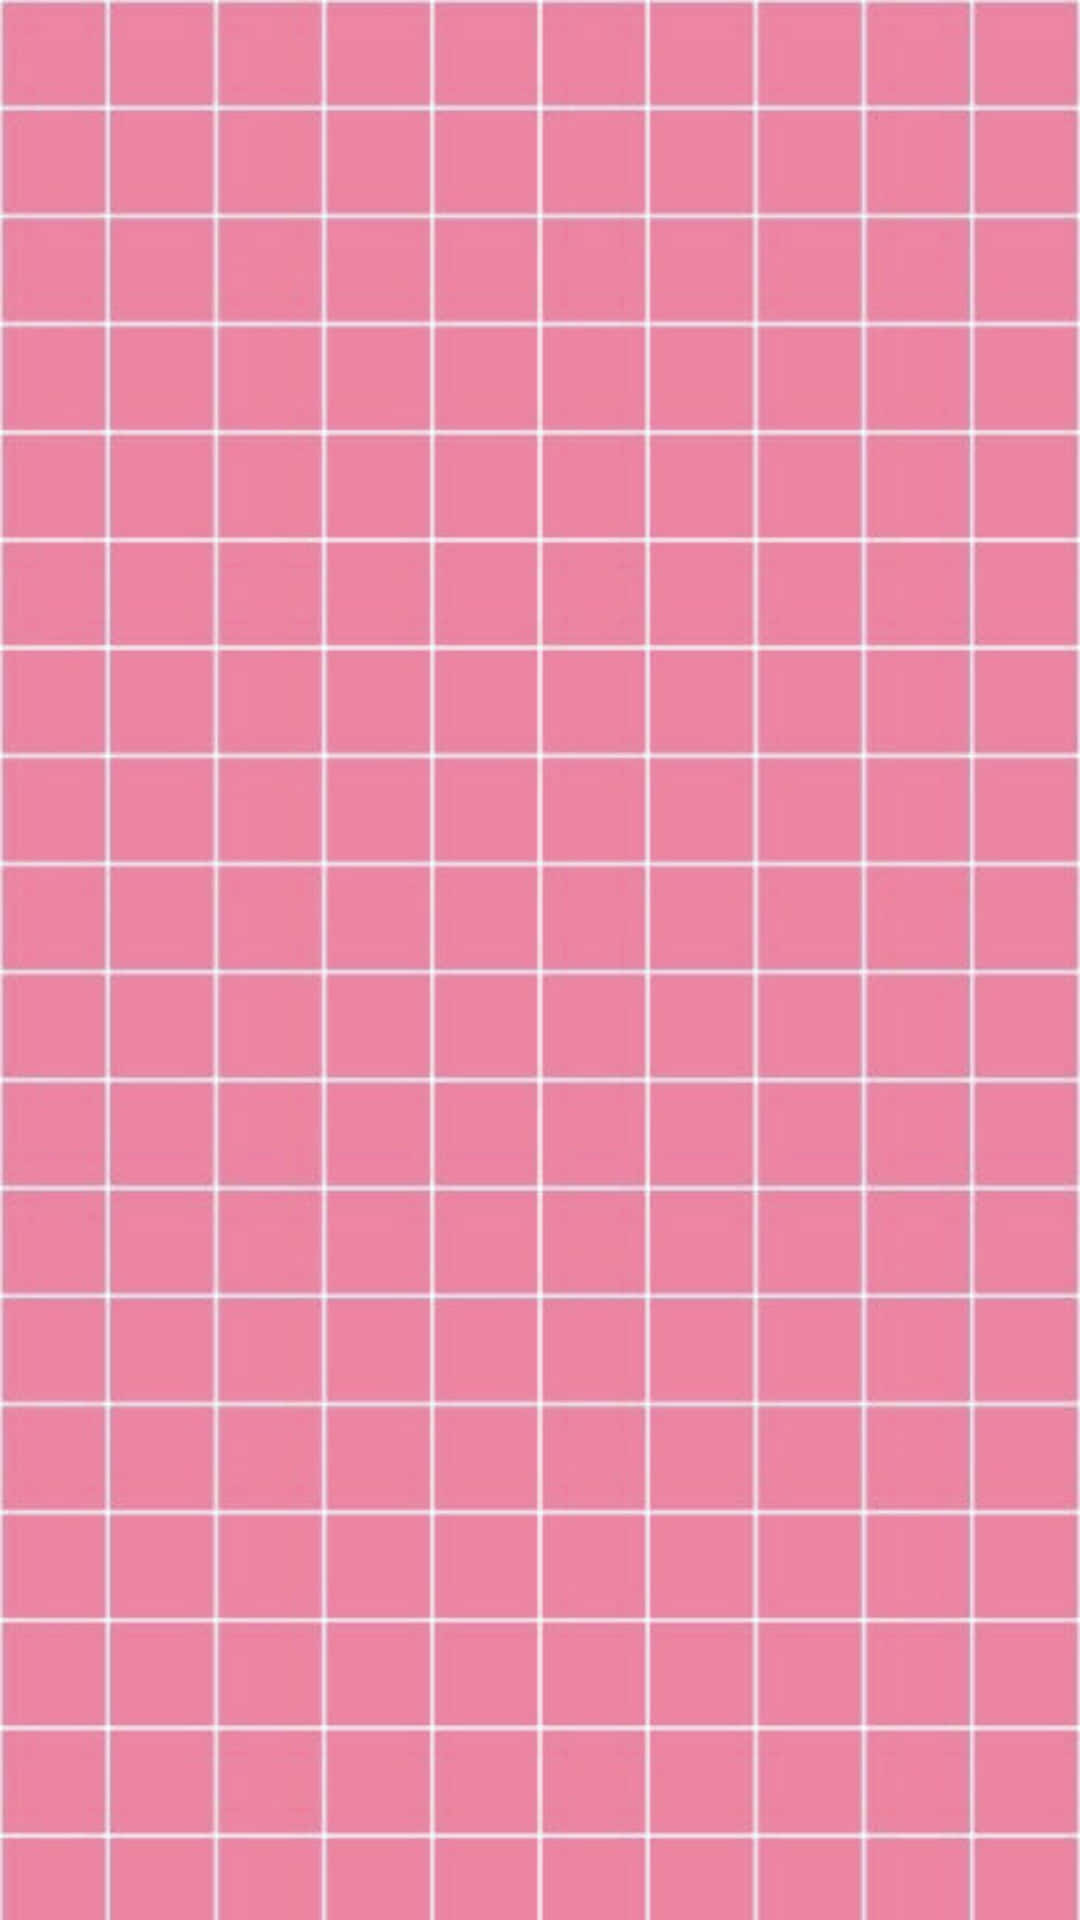 Download Pastel Aesthetic Grid Wallpaper